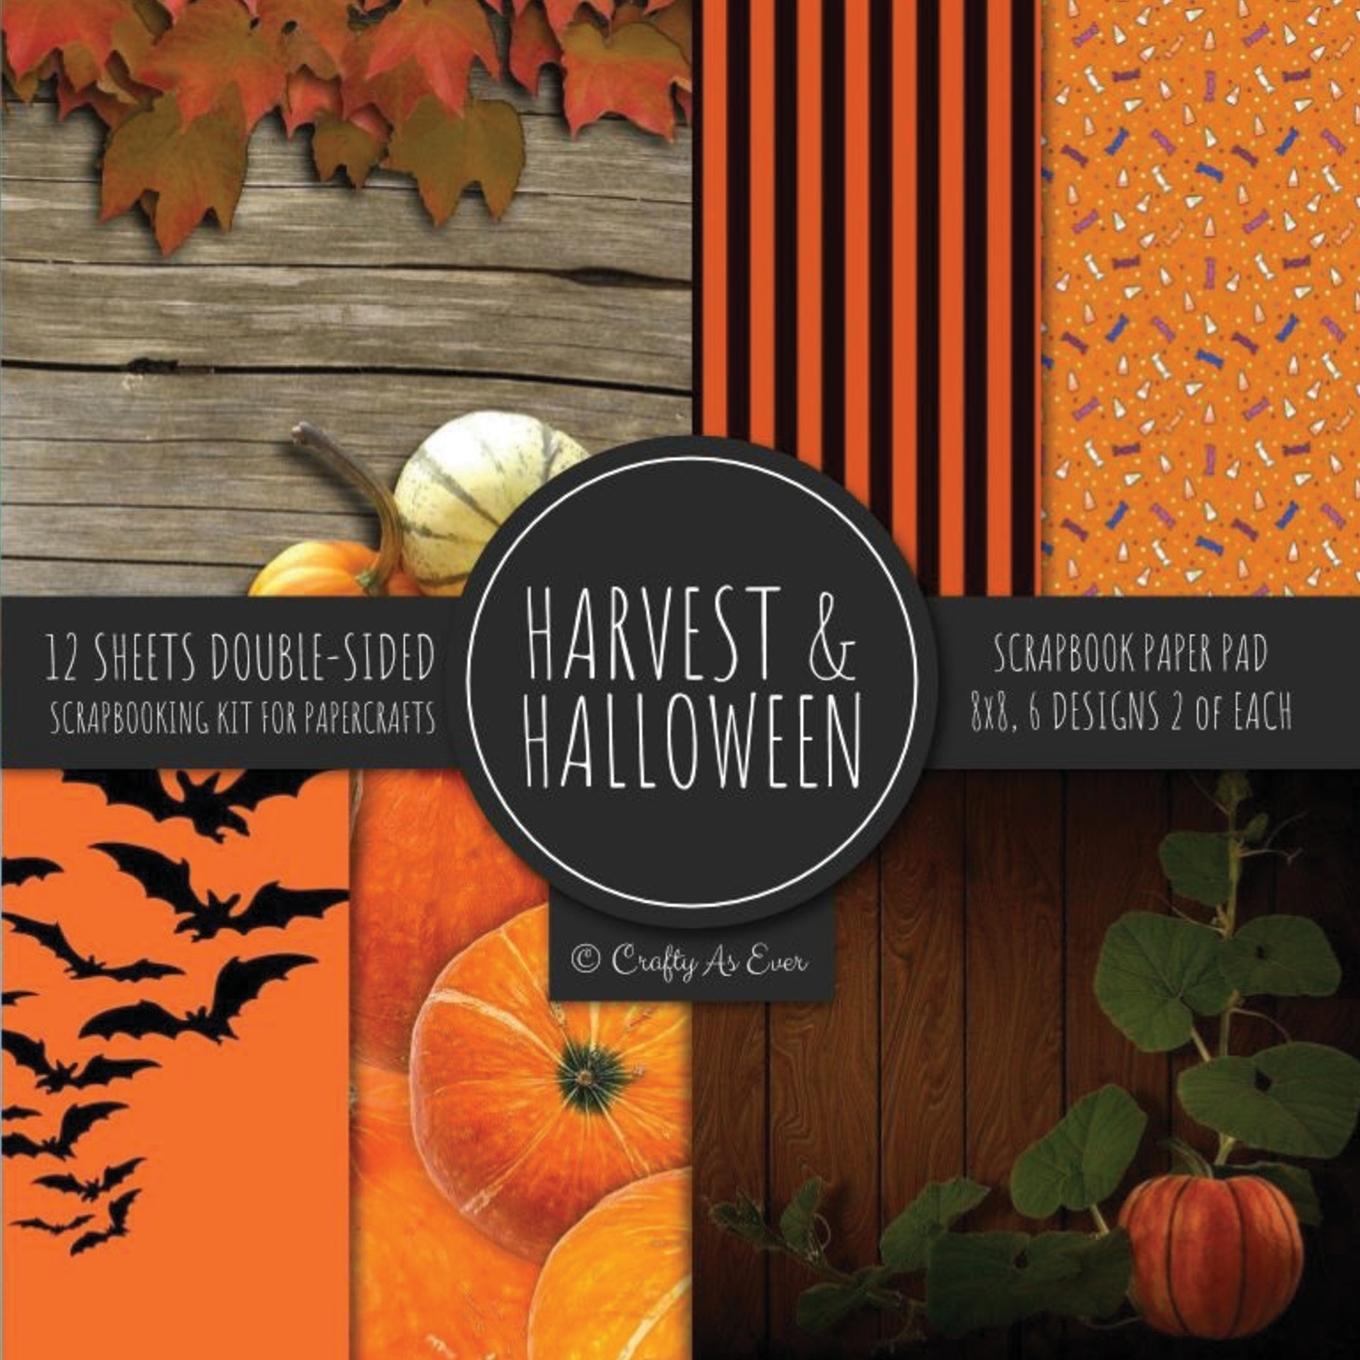 Carte Harvest & Halloween Scrapbook Paper Pad 8x8 Scrapbooking Kit for Papercrafts, Cardmaking, Printmaking, DIY Crafts, Orange Holiday Themed, Designs, Bor Crafty as Ever